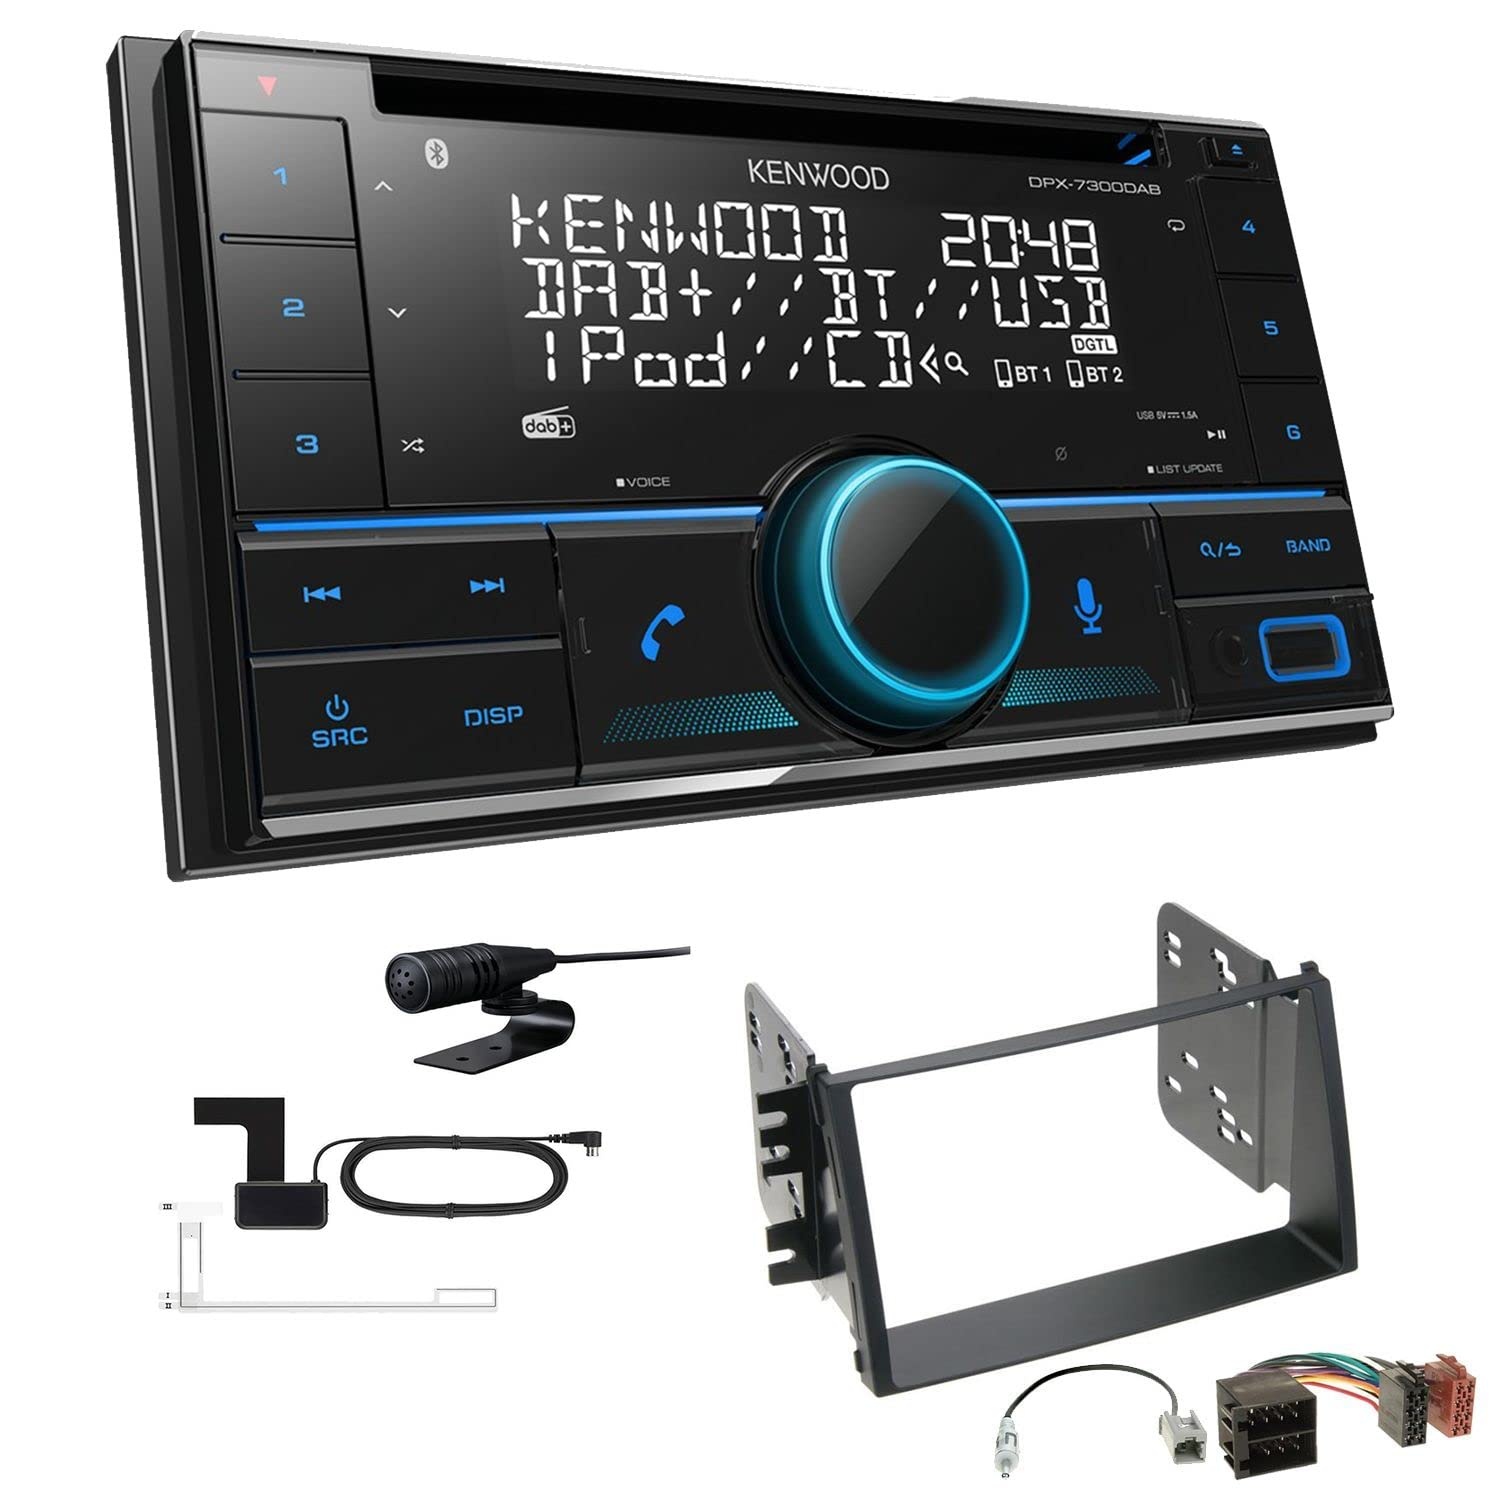 Kenwood DPX-7300DAB 2-DIN Autoradio mit Bluetooth Digitalradio DAB+ USB CD passend für KIA Soul 2008-2011 schwarz